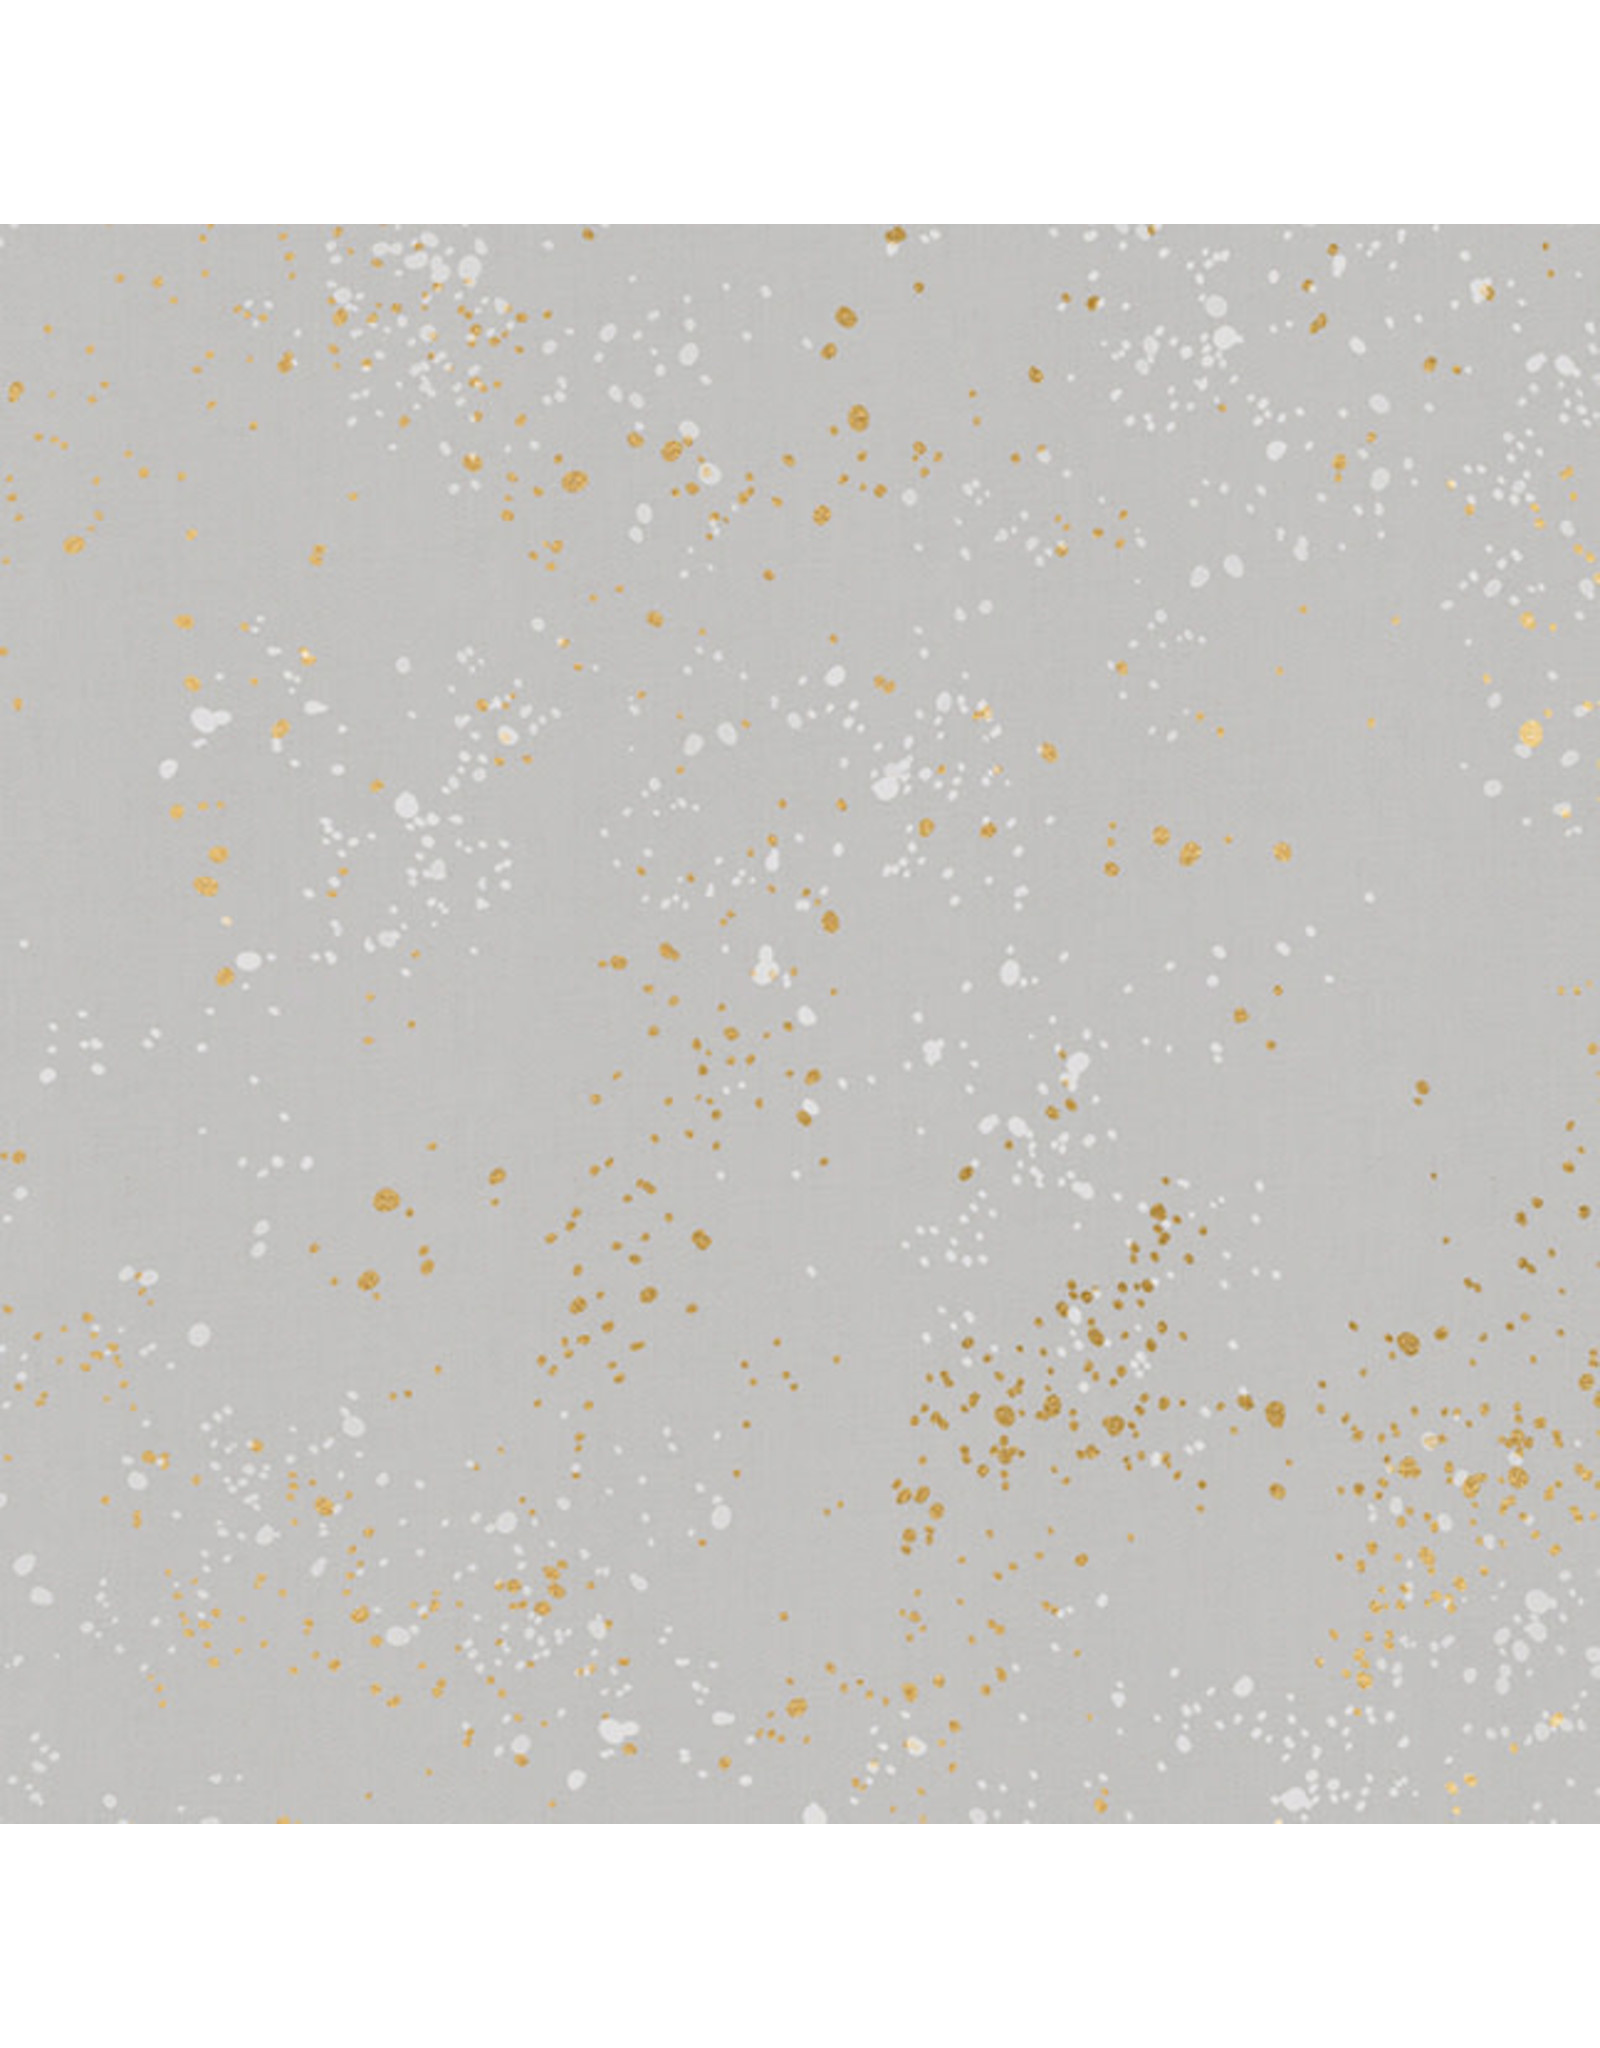 Rashida Coleman-Hale Ruby Star Society, Speckled Metallic in Dove, Fabric Half-Yards